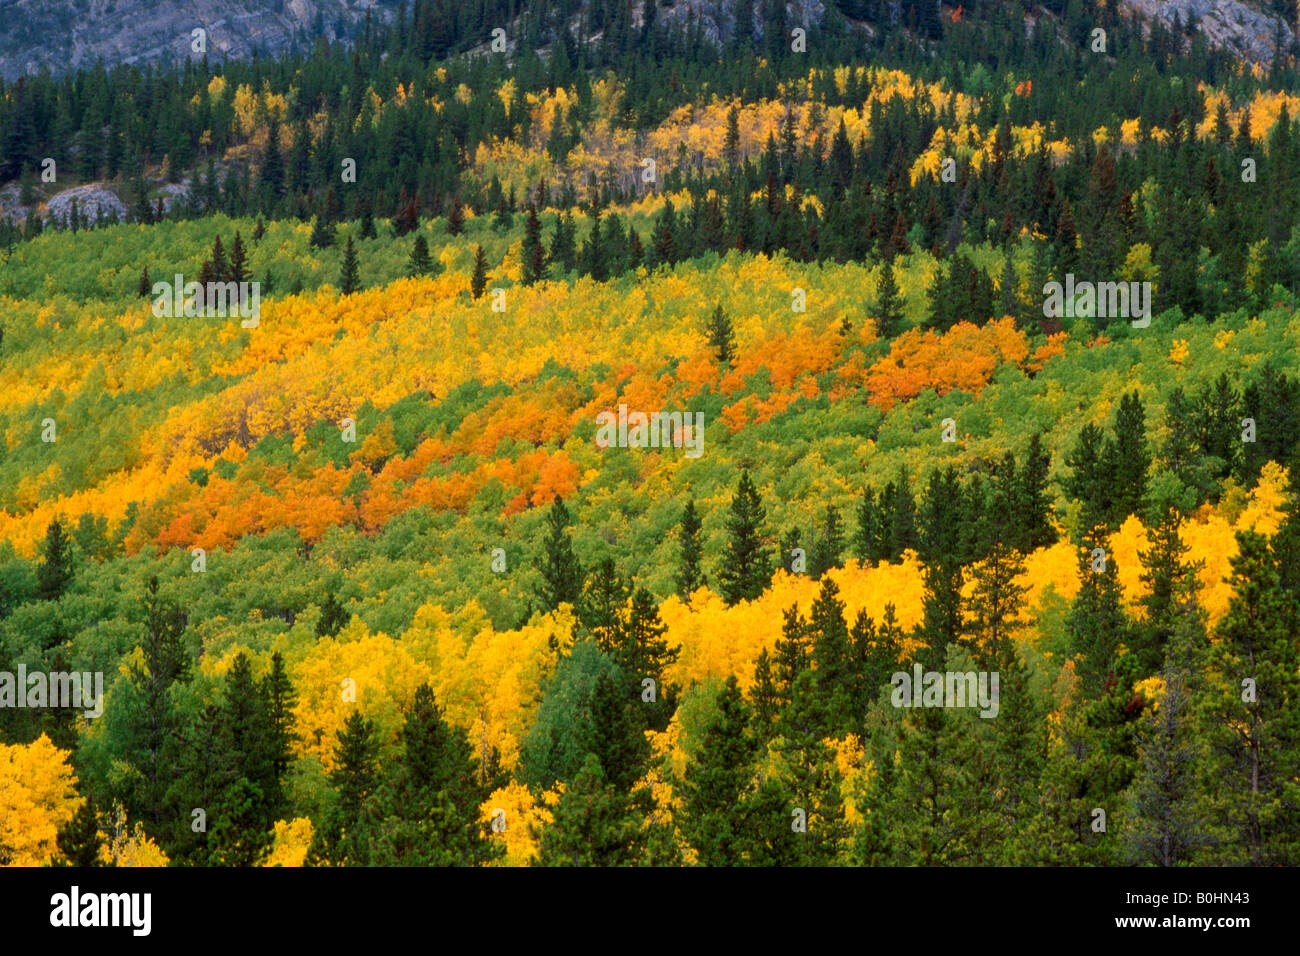 Mixed forest, Common Aspen (Populus tremula), Pine (Pinus) and Spruce trees (Picea) in Kananaskis, Alberta, Canada Stock Photo